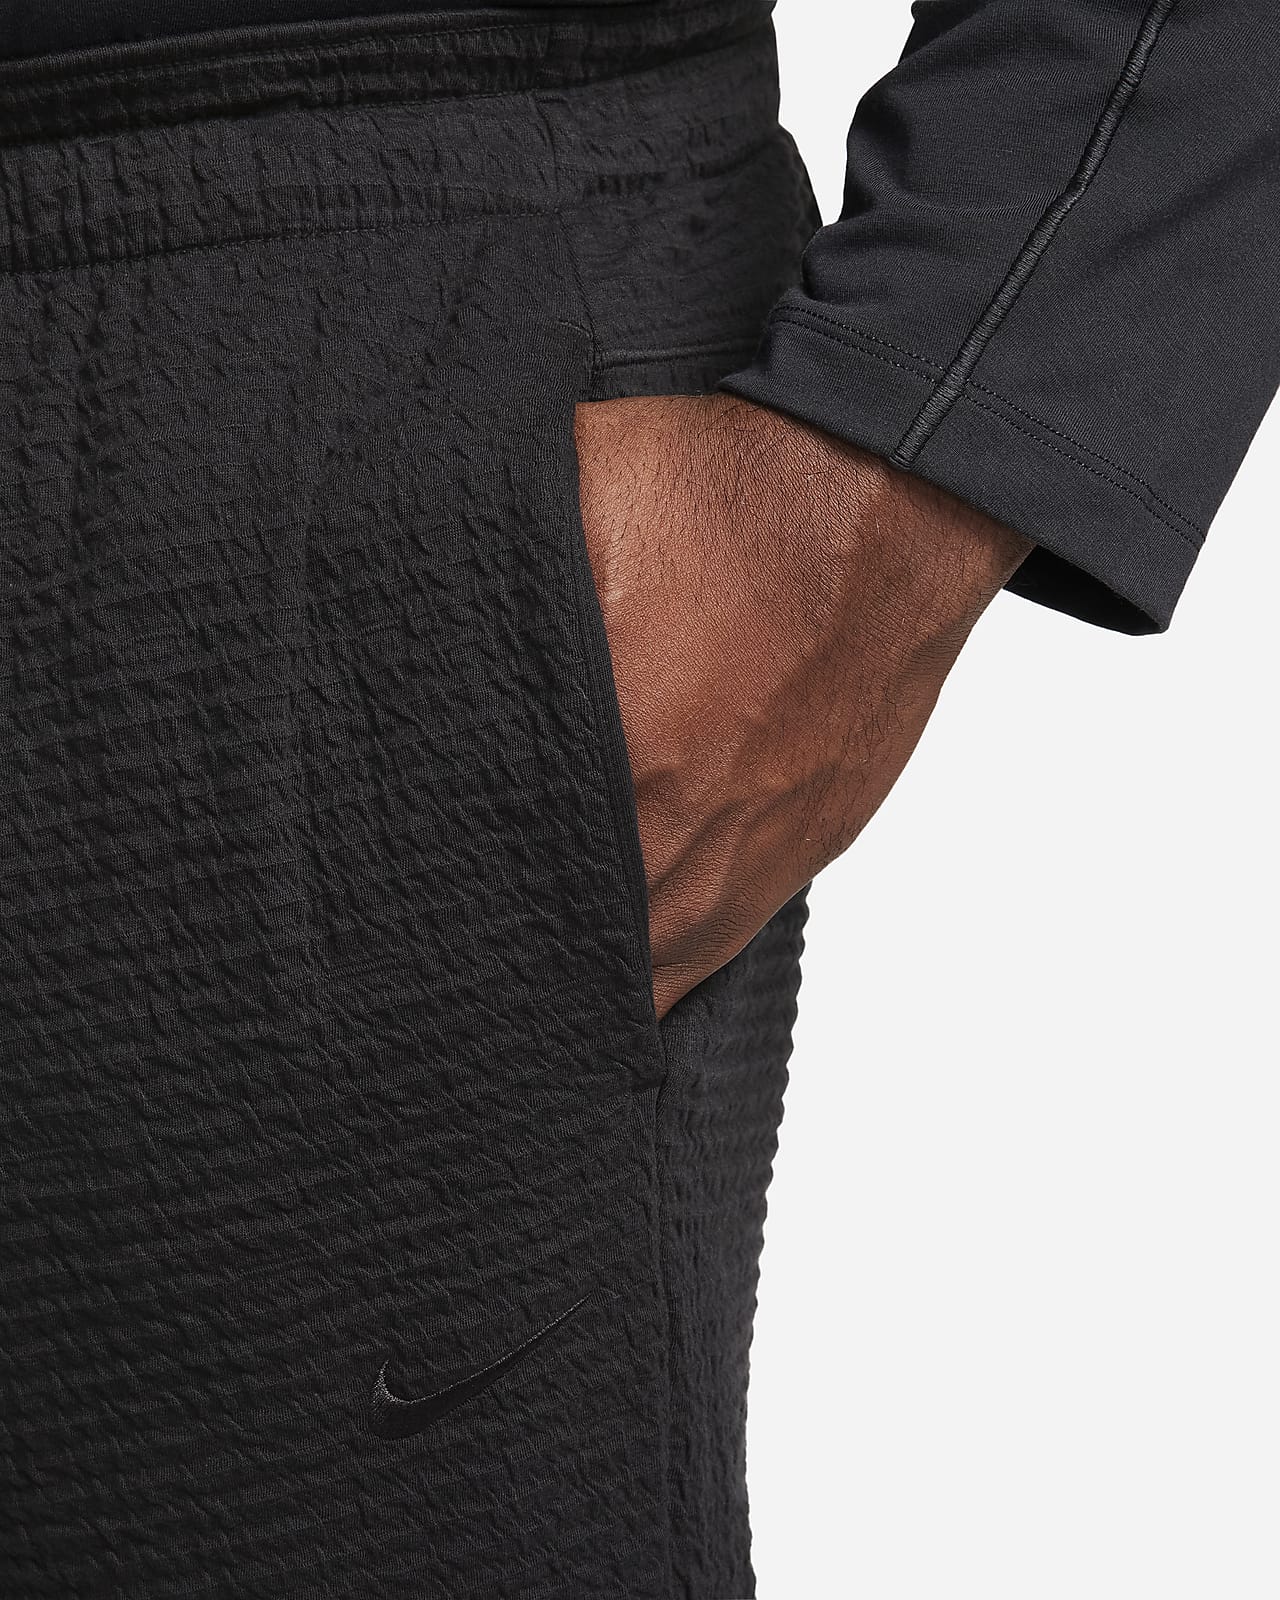 Nike Yoga Pants Polyester/Wool Blend.